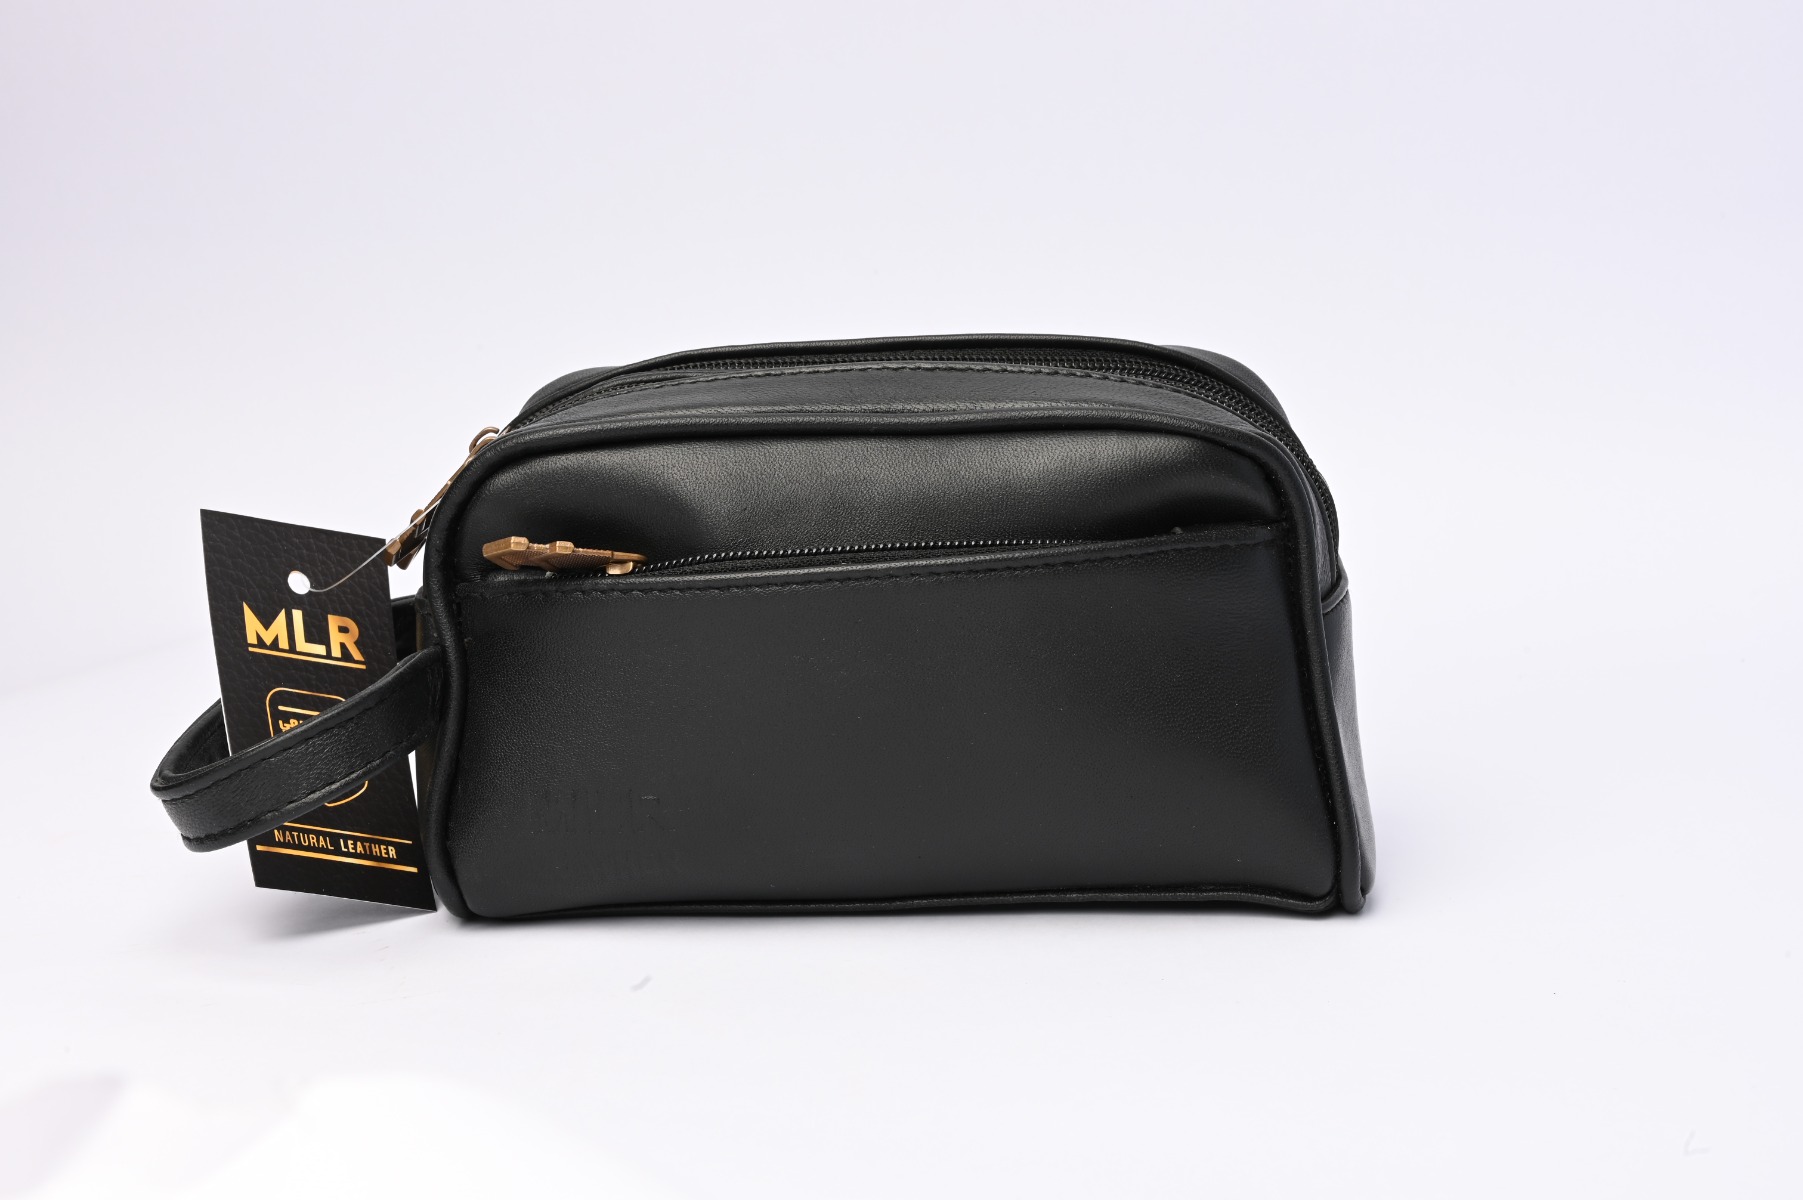 MLR hand bag size 6 x 19 x 25 cm, genuine genuine leather of lamb or sheep skin, black - MLR-H001